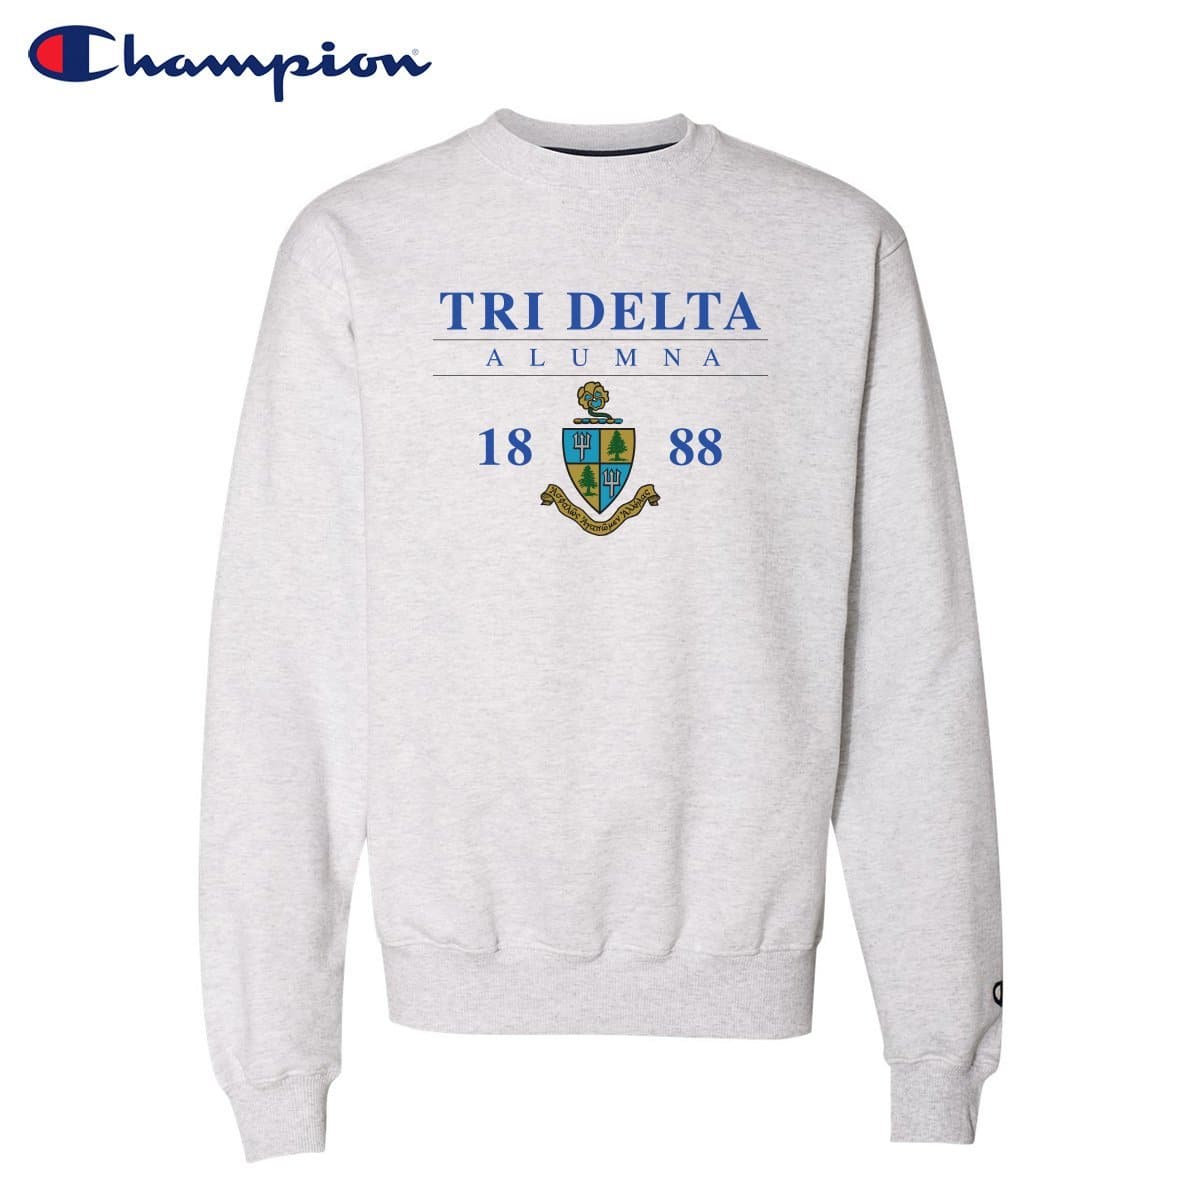 Tri Delta Alumni Champion Sweatshirt | Delta Delta Delta | Sweatshirts > Crewneck sweatshirts